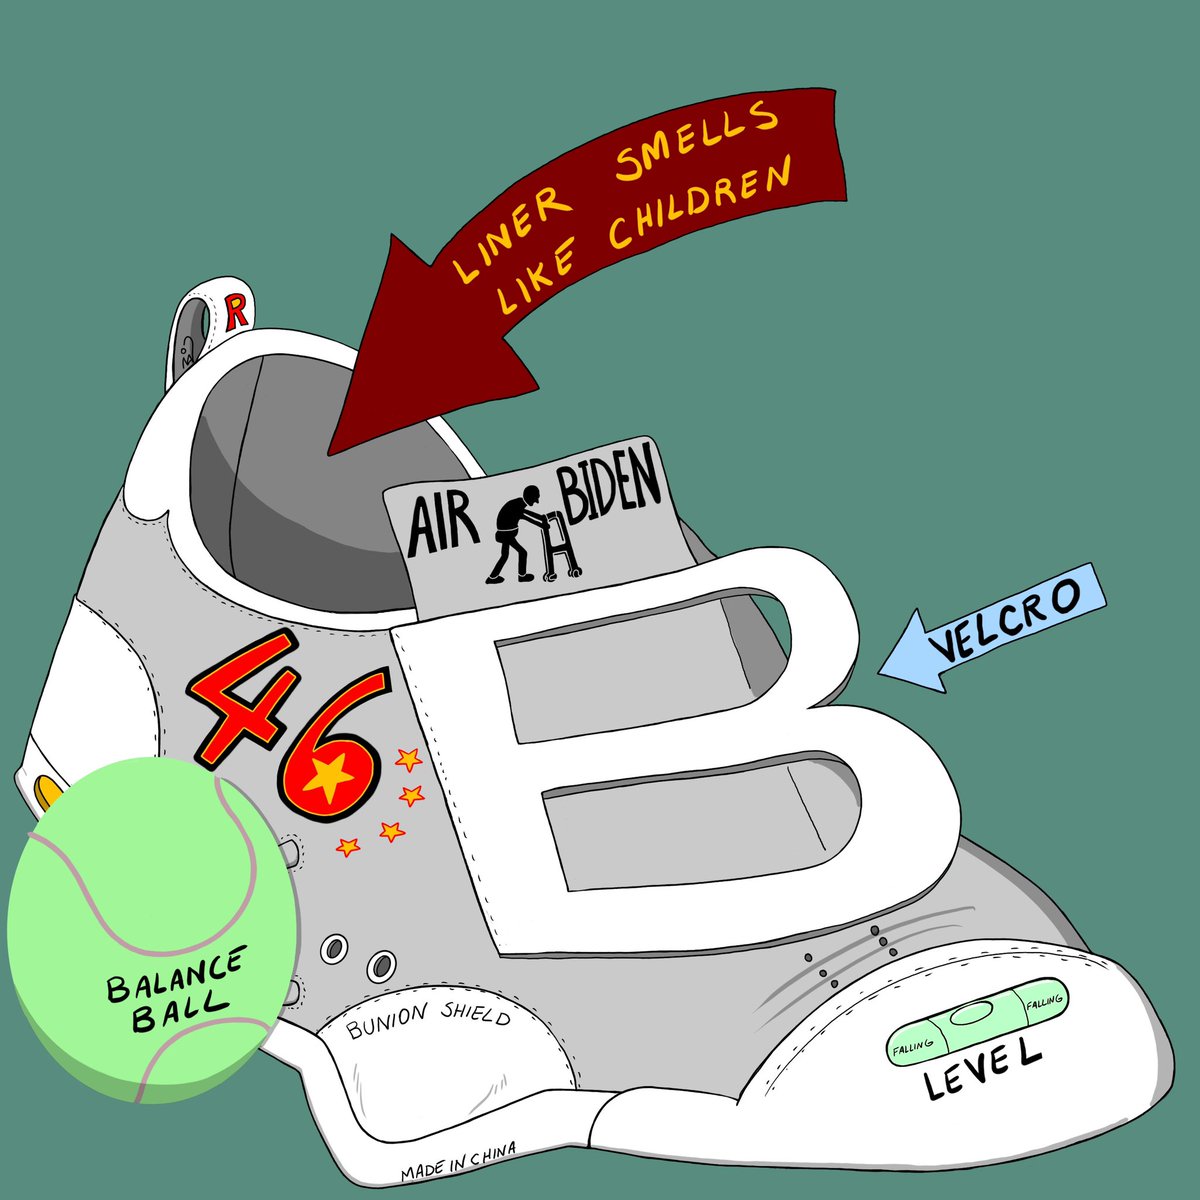 #sneaker #newrelease #sneakerdrop #shoes #sneakers #sneakerheads #joebiden #biden #drop #kicks #nike #puma #jordans #balenciaga #nb #newbalance #doodle #comic #art #illustrator #illustration #dailydoodle #dailyart #dailycomic #popart #miami #brickell #florida #305 #fjb